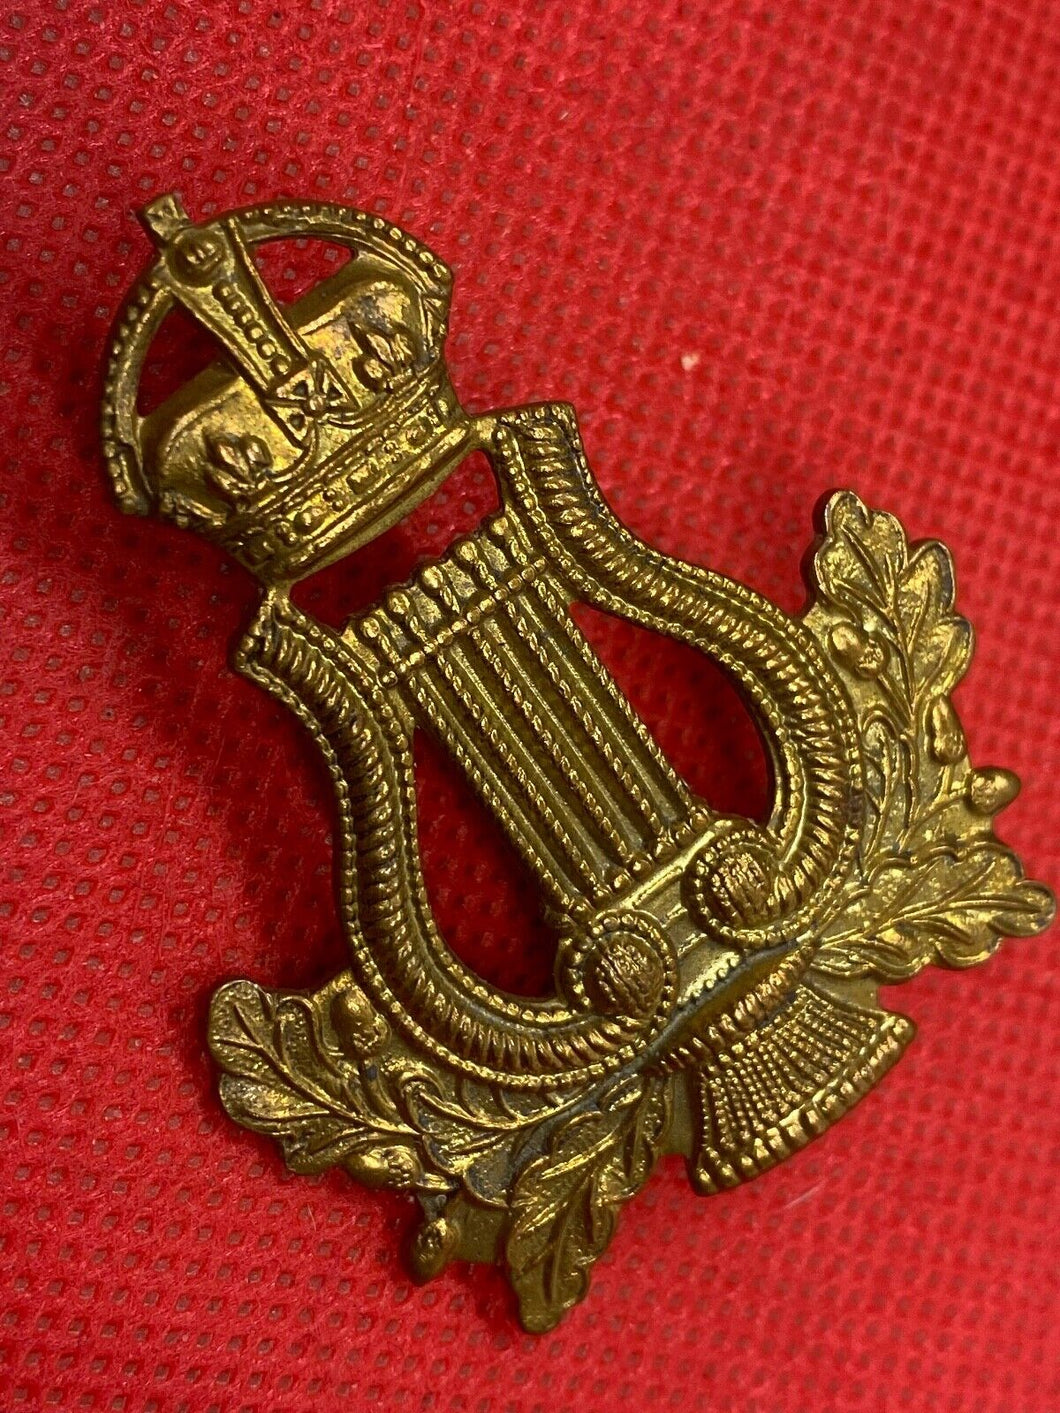 Original WW1 / WW2 British Army Musician's Cap / Collar Badge